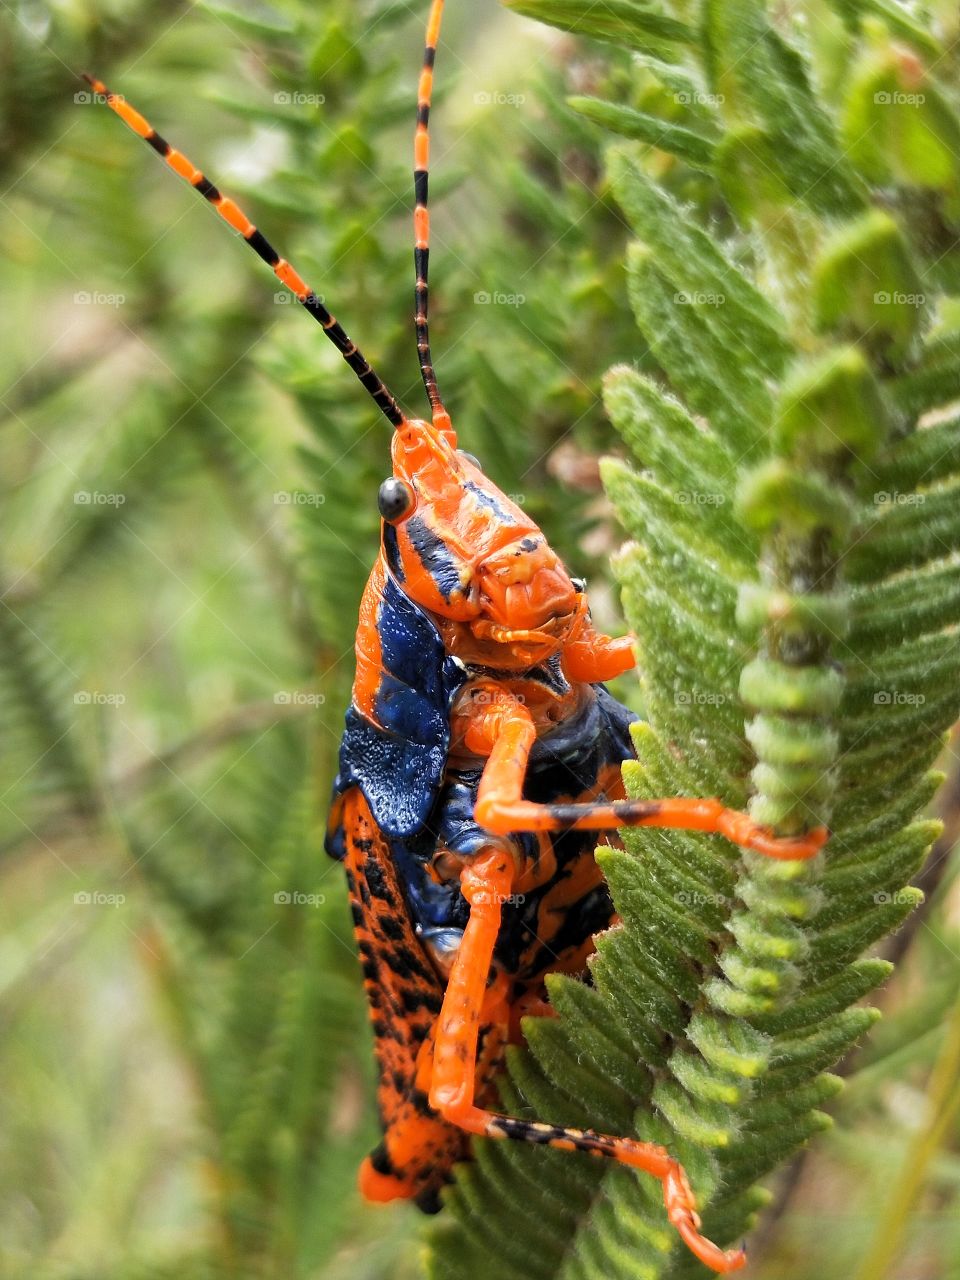 #LeichhardtGrasshopper #grasshopper #kakadunationalpark #northernterritory #Australia #colourful #unique #oneofakind